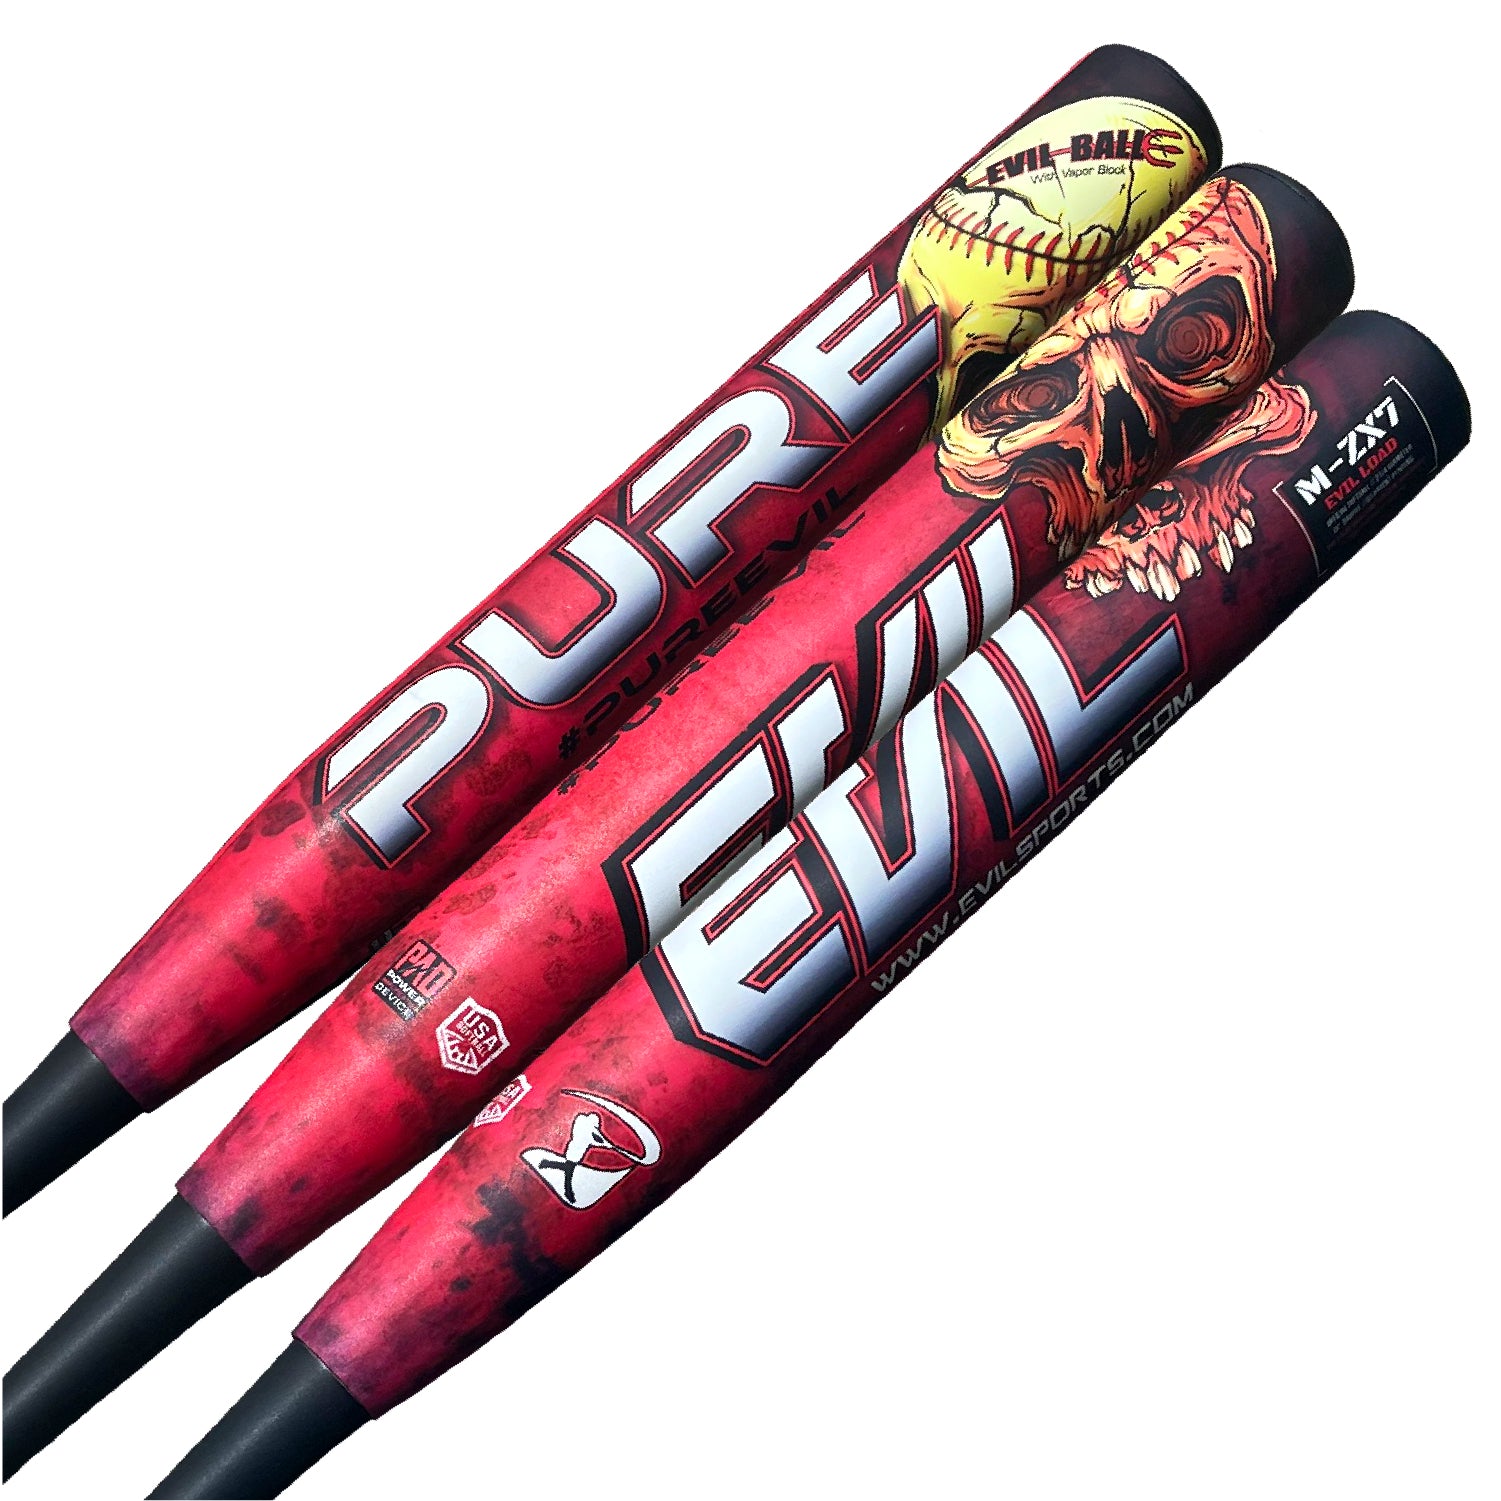 The Pure Evil USA/ASA Certified Composite bat.